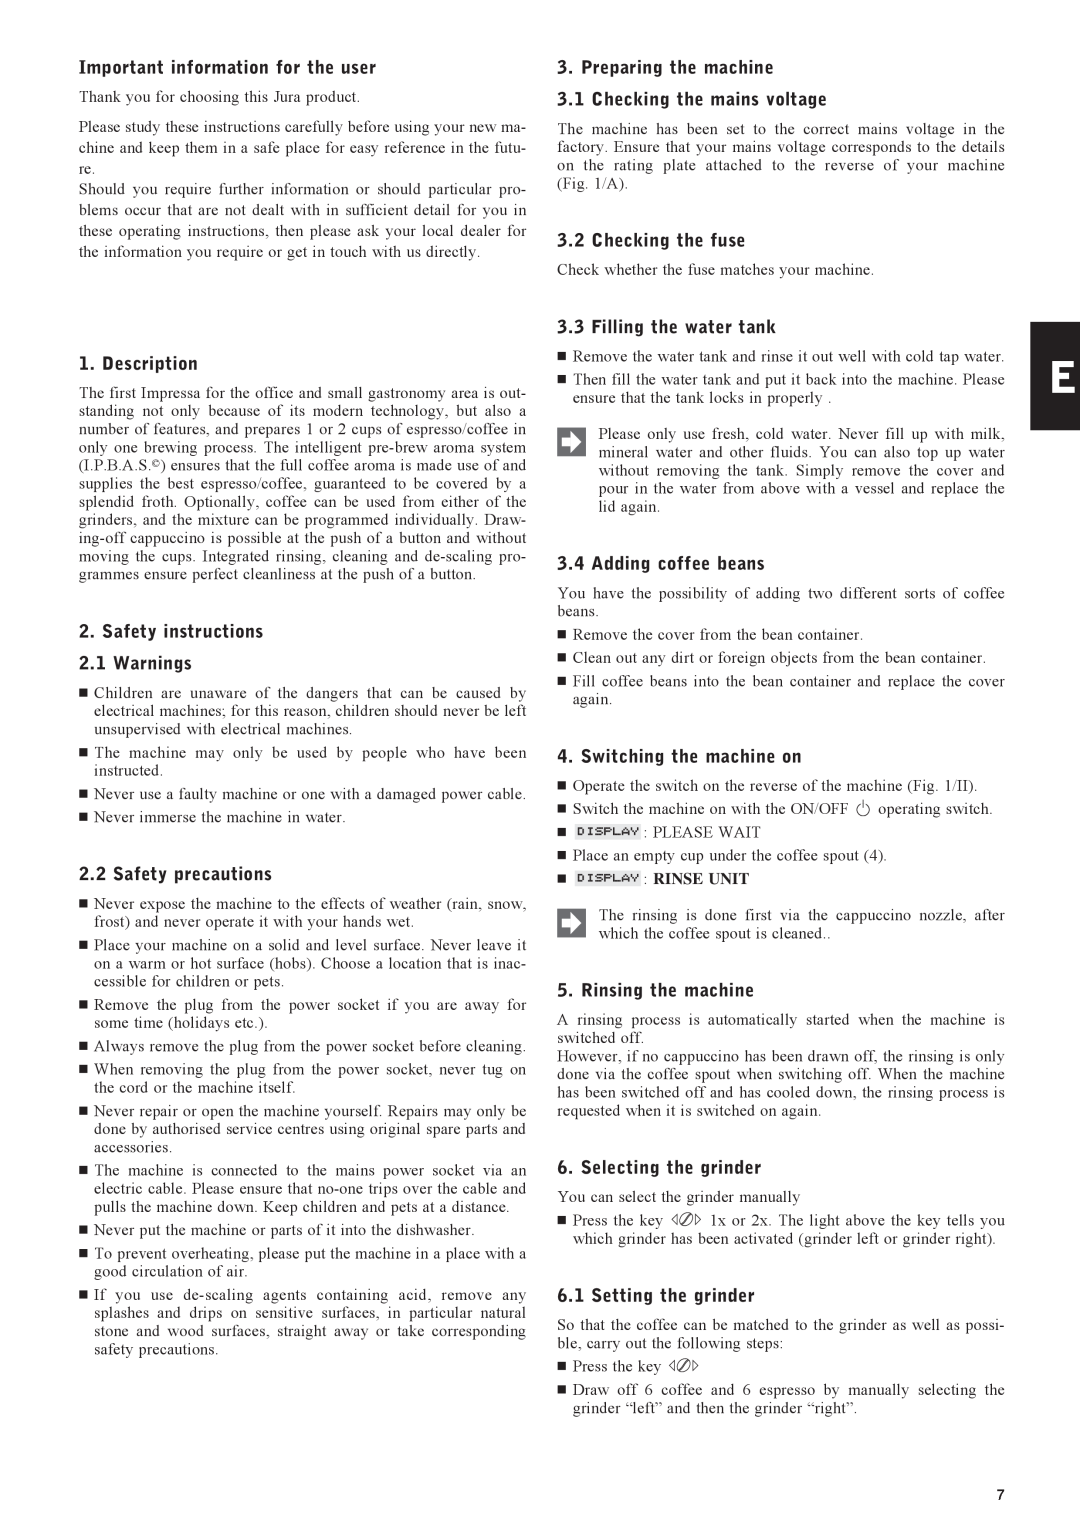 Jura Capresso IMPRESSA X7 manual Important information for the user, Description, Safety instructions 2.1 Warnings 